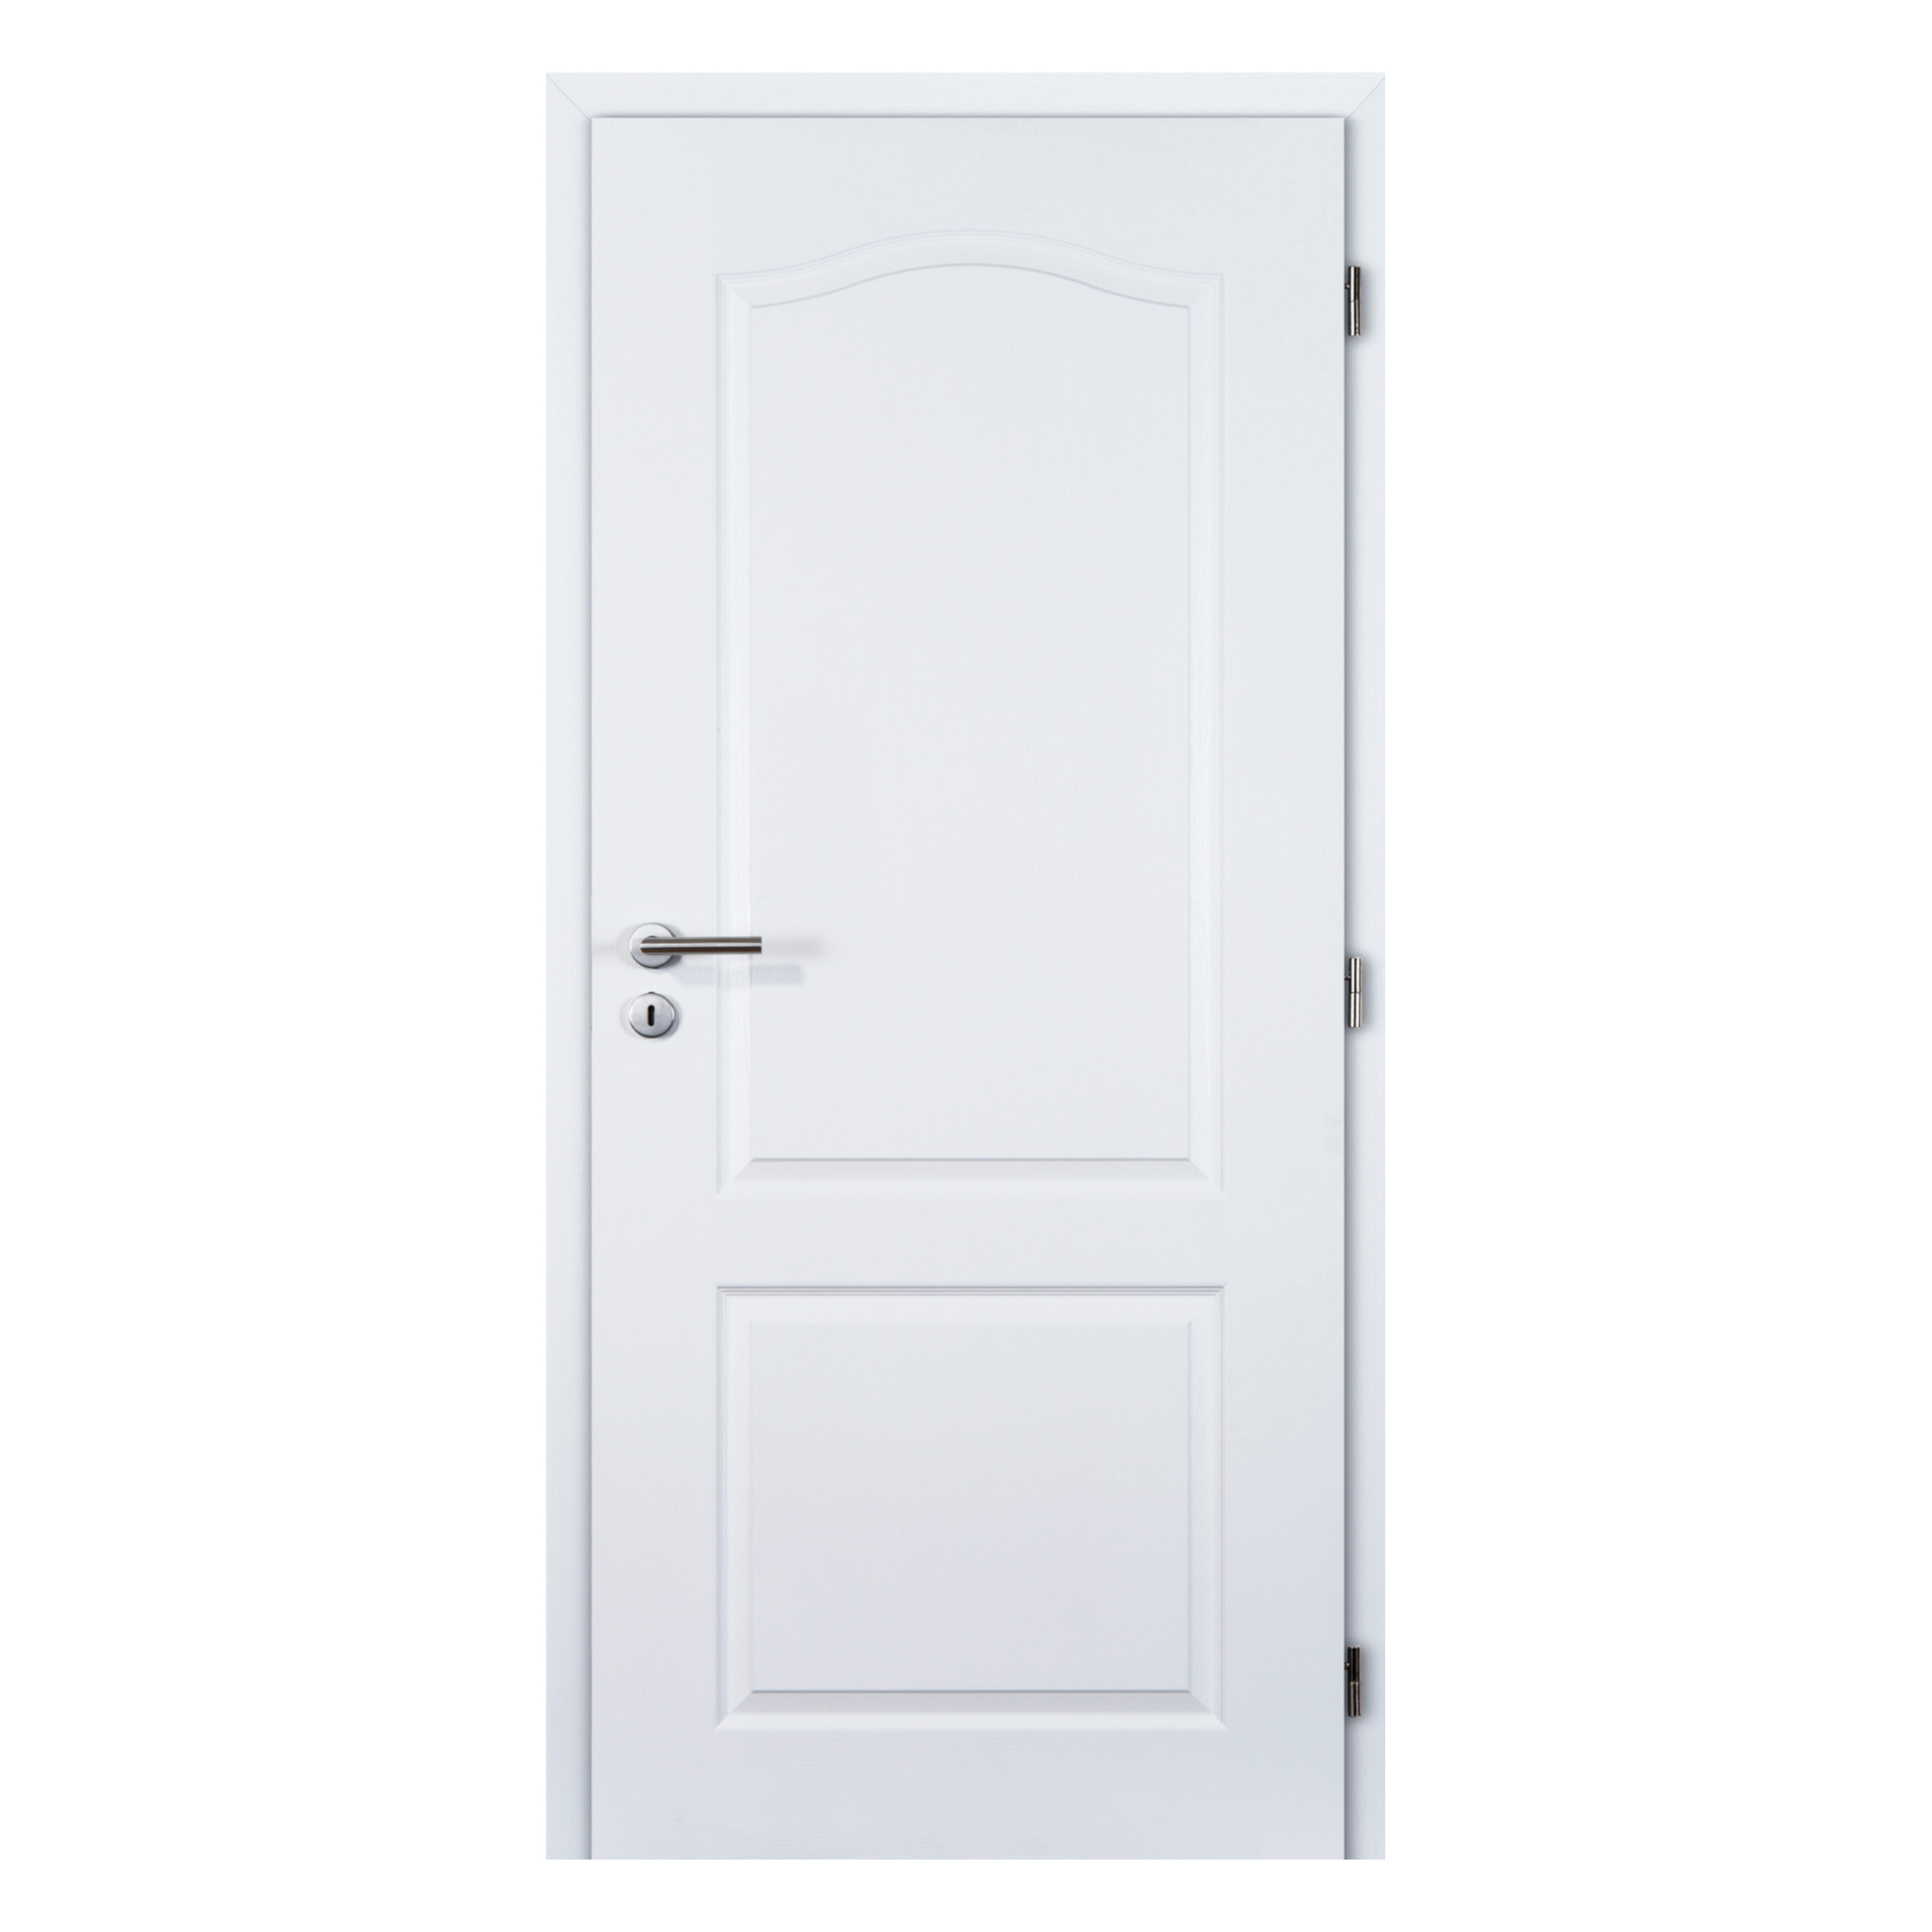 Dveře plné profilované Doornite Claudius bílé pravé 700 mm